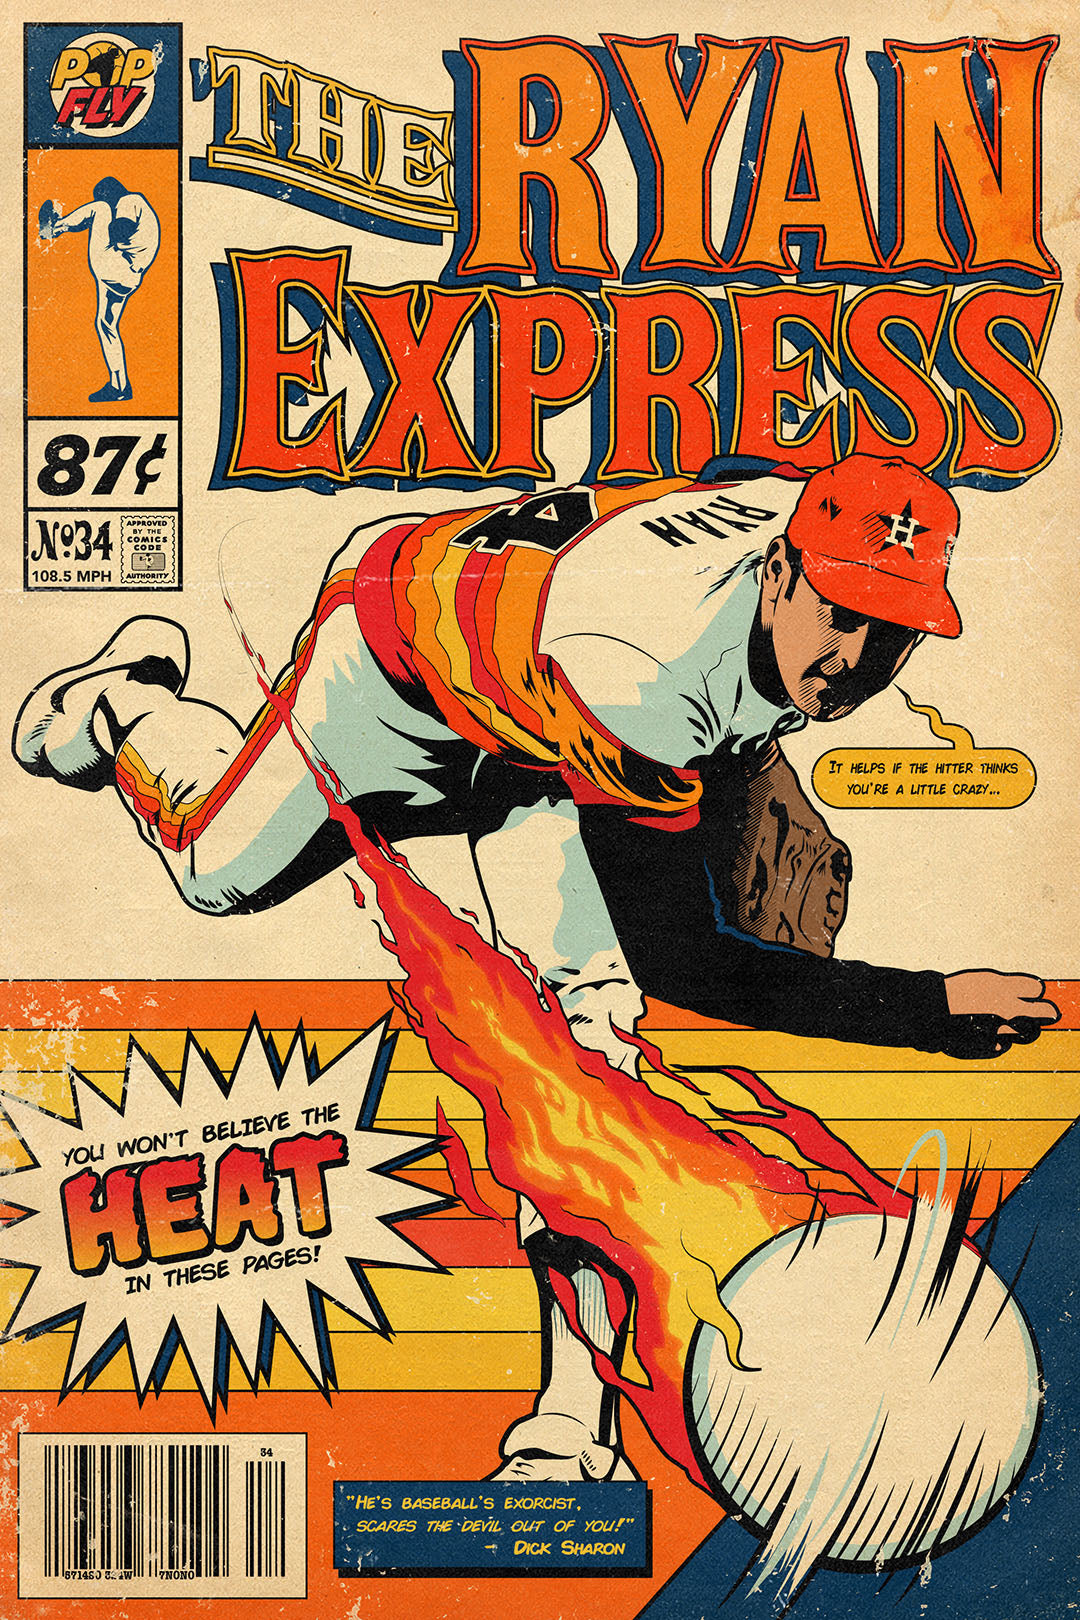 13. (SOLD OUT) "The Ryan Express" Nolan Ryan 7" x 10.5" Art Print